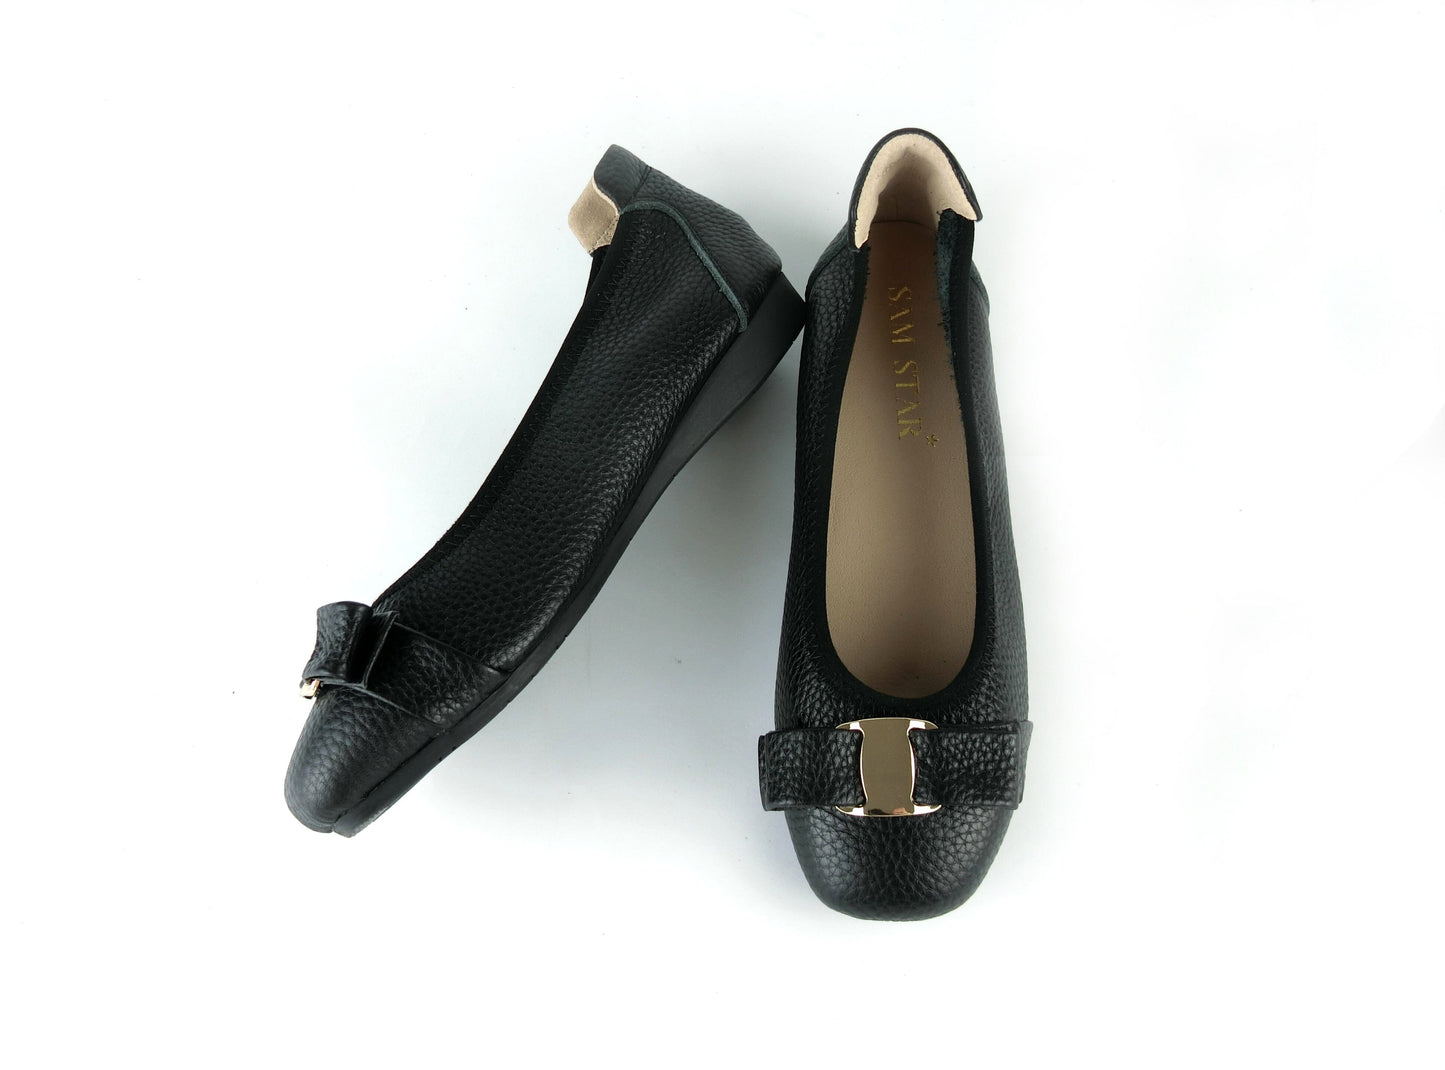 163-13 Leather pumps with gold buckle ( SALE ) Pumps Sam Star shoes Black 37/4 